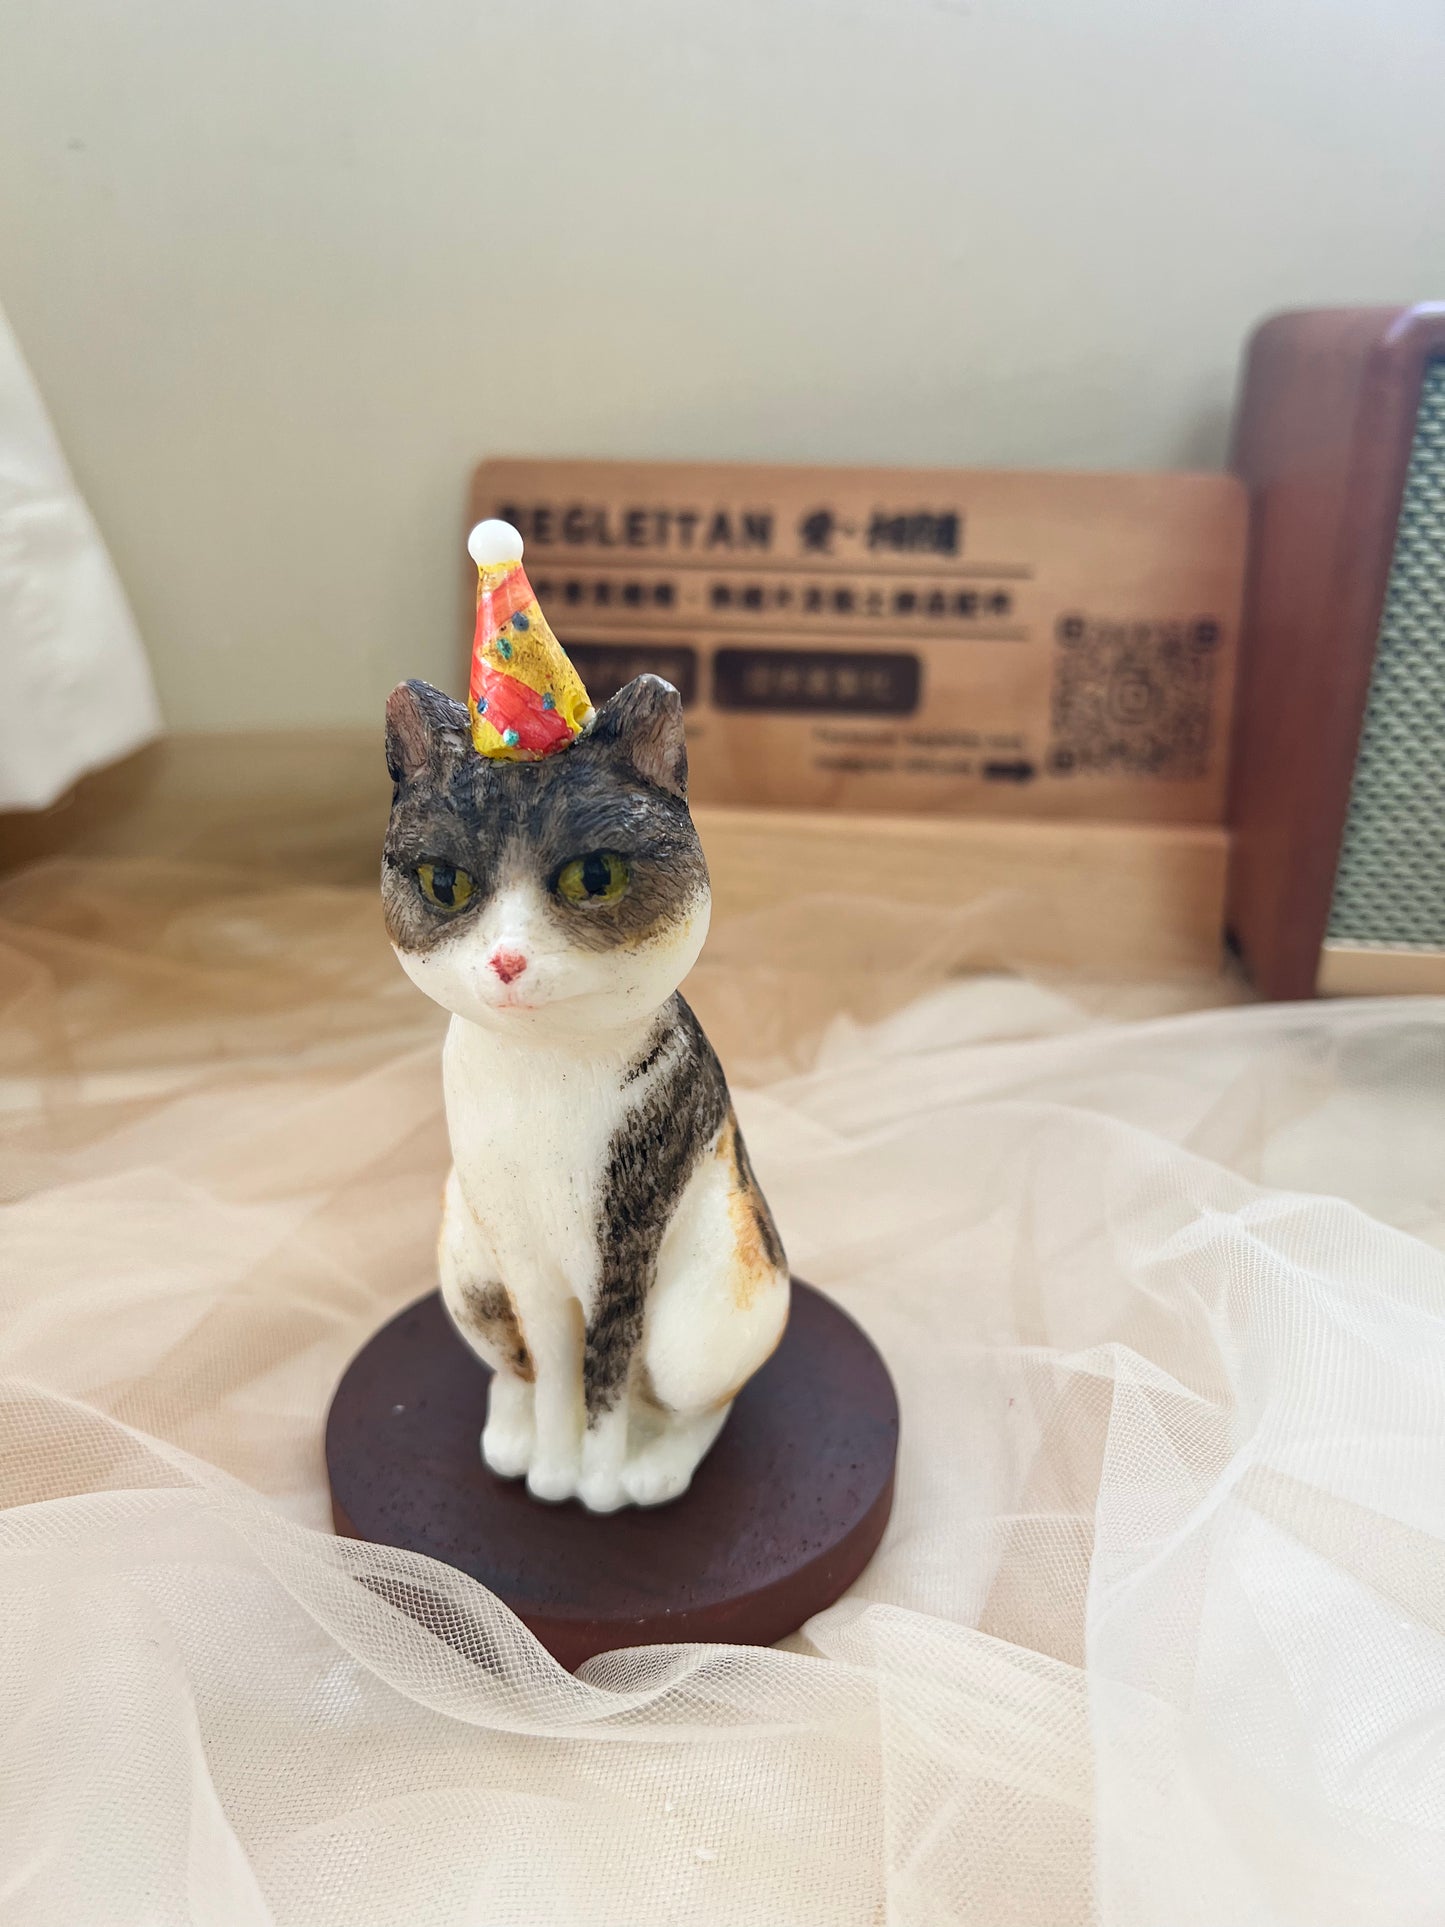 [Begleitan Exclusive]  Pawsitively Custom Candle - Cat